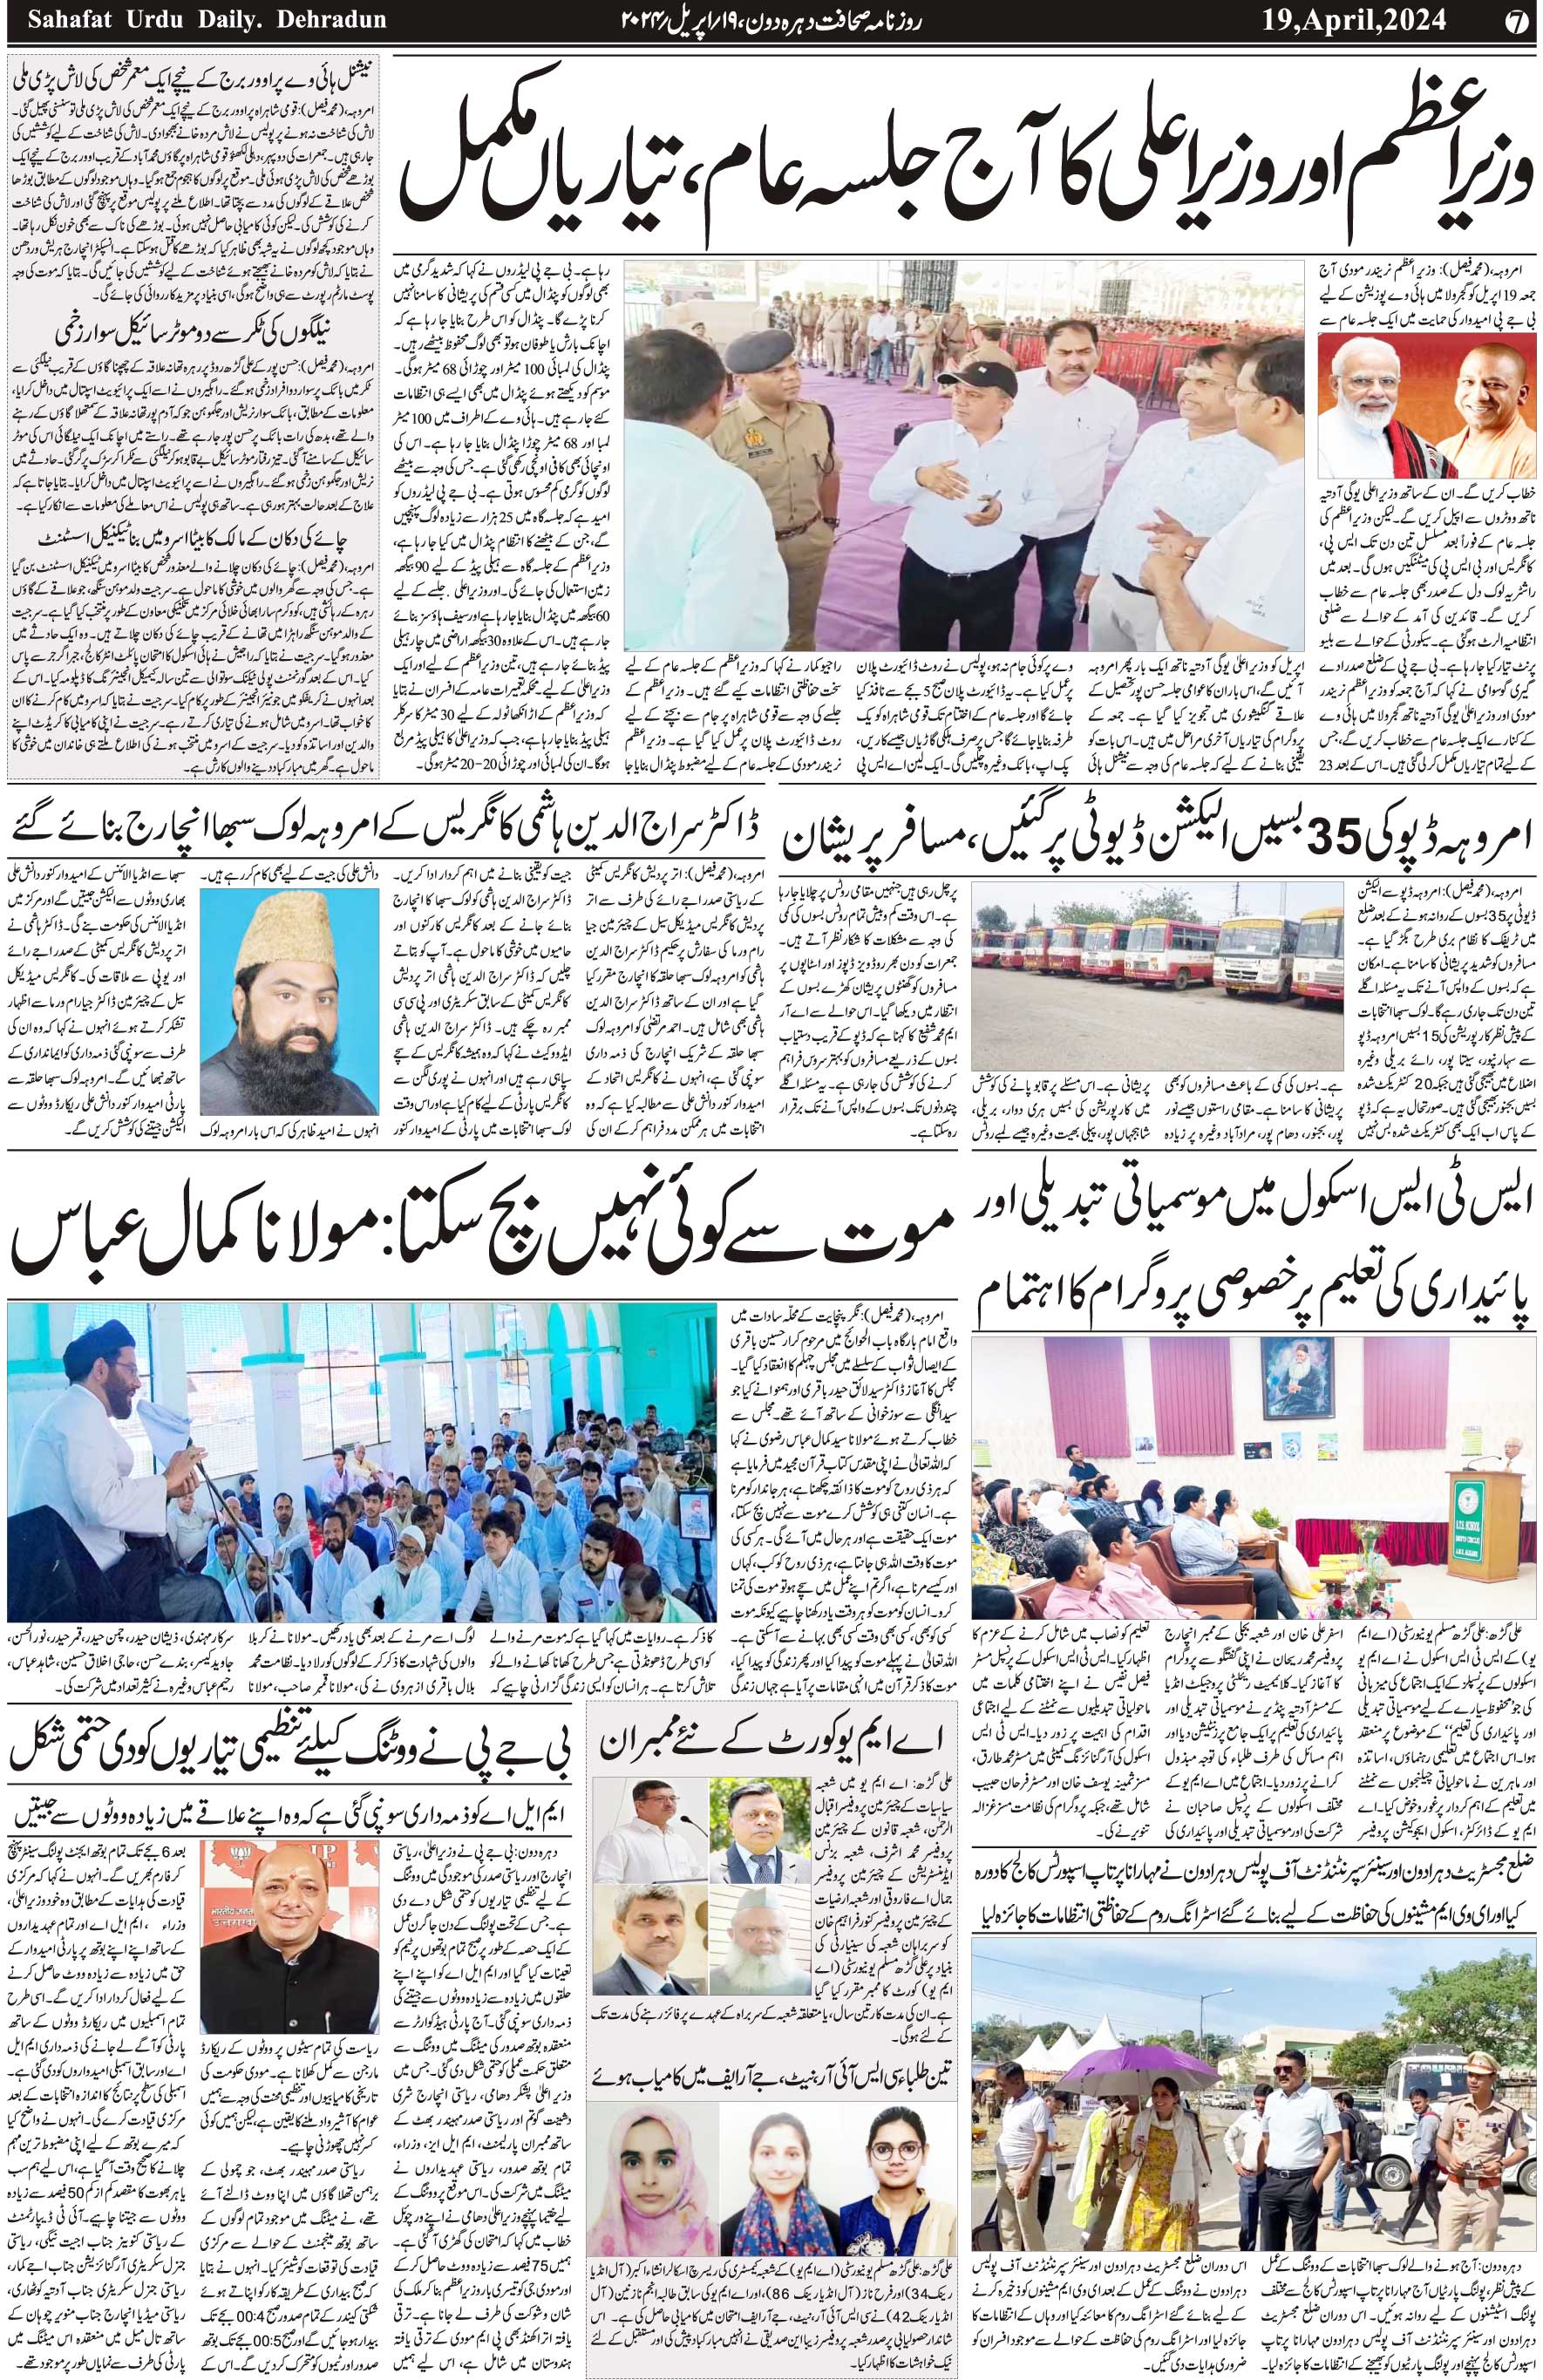 The Sahafat Urdu Daily, Published From Mumbai Maharashtra, India, Hindustan, Epaper Sahafat